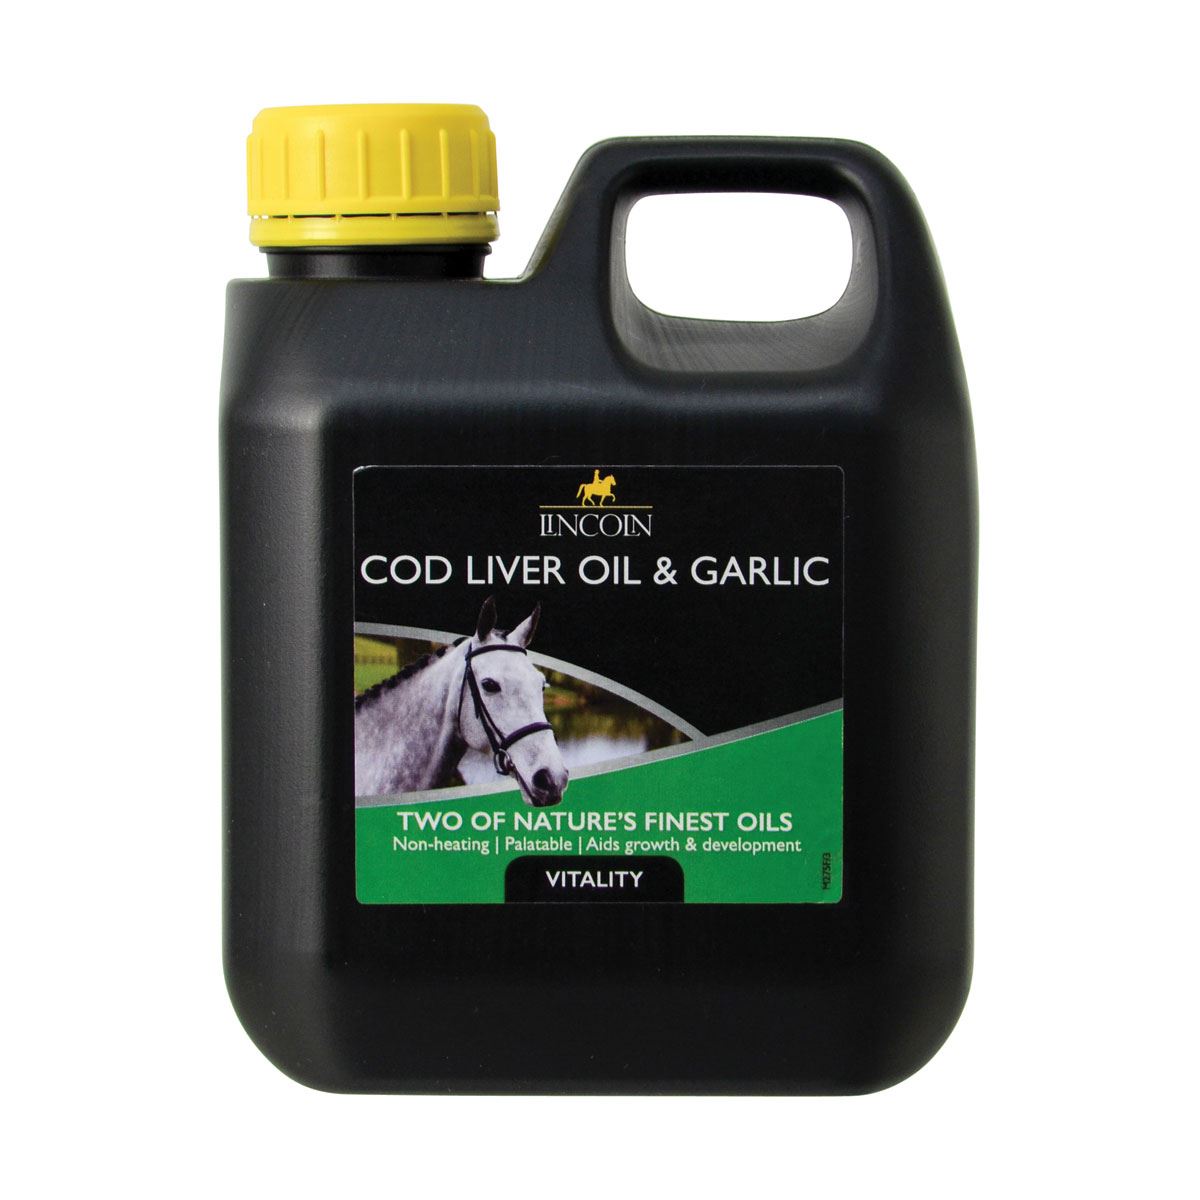 Lincoln Cod Liver Oil & Garlic - Just Horse Riders